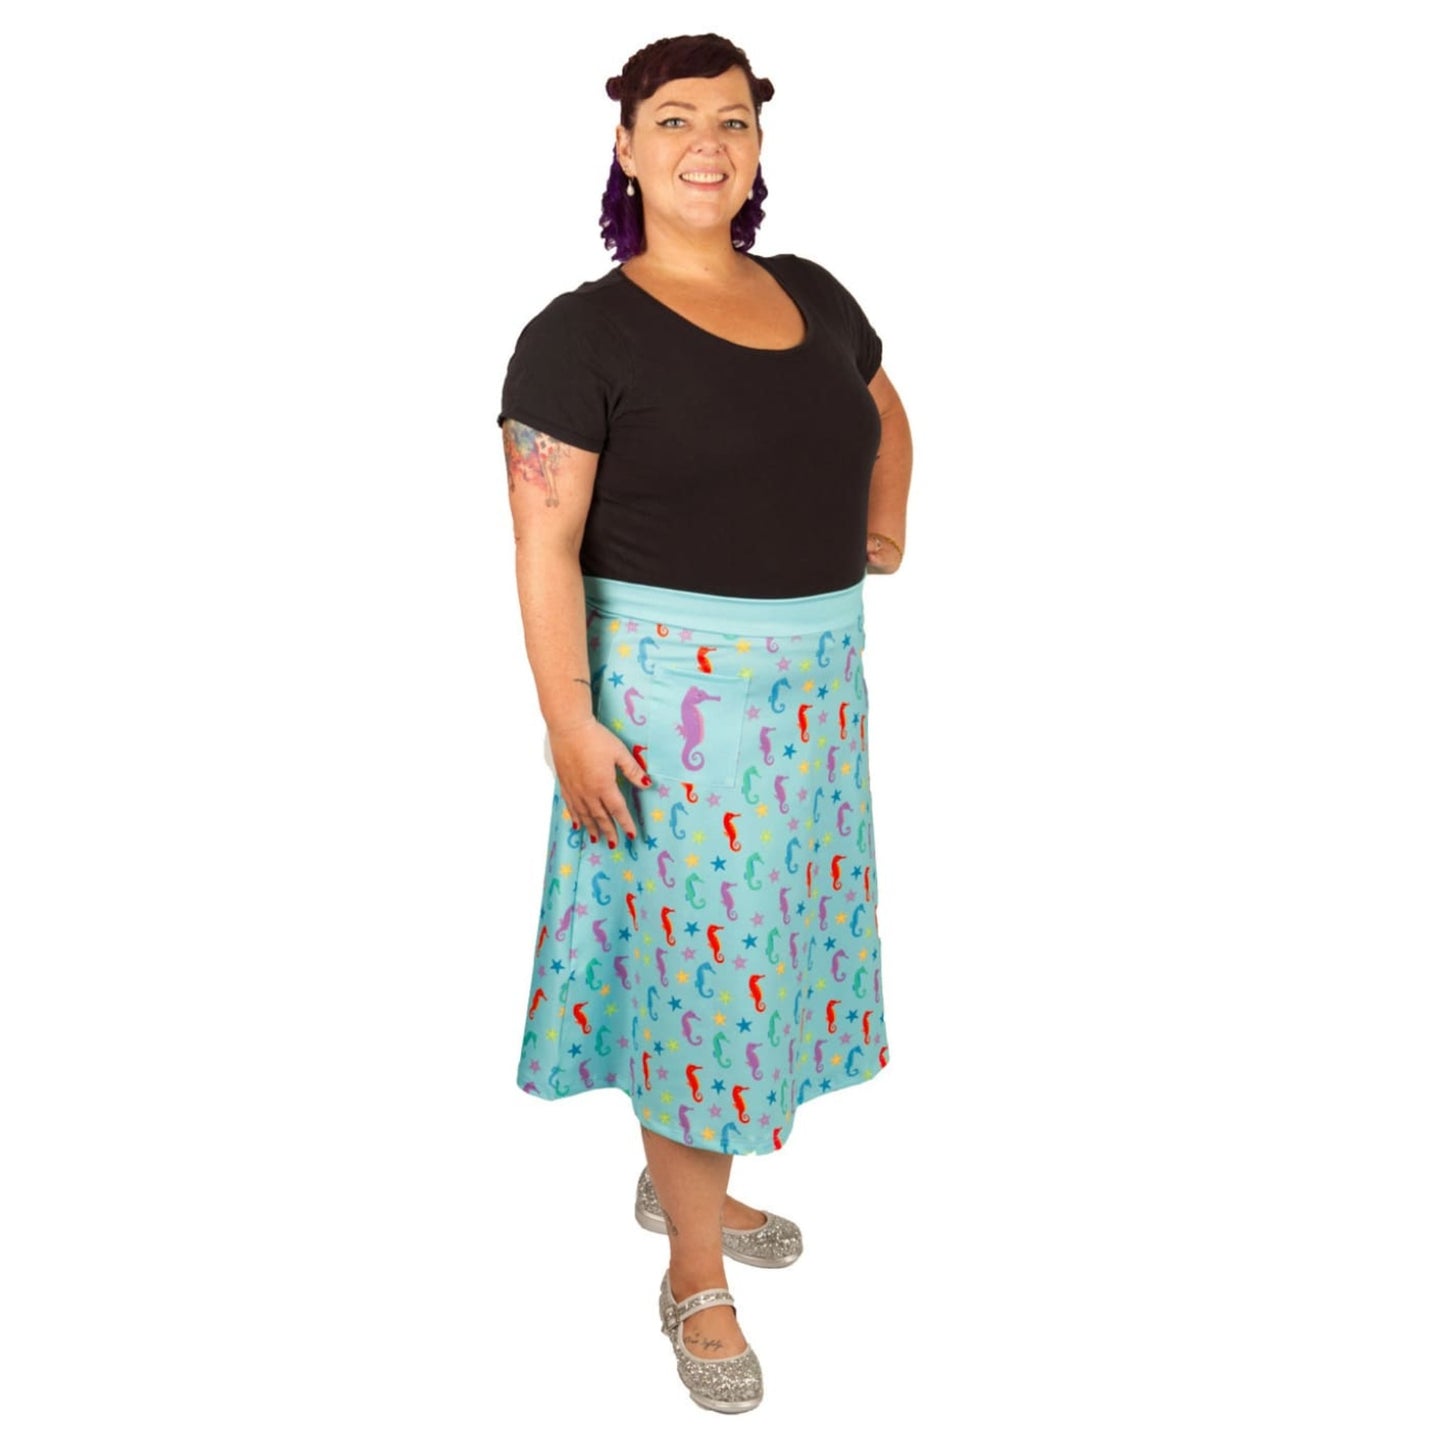 Oceania Original Skirt by RainbowsAndFairies.com.au (Seahorse - Starfish - Under The Sea - Kitsch - Aline Skirt With Pockets - Vintage Inspired) - SKU: CL_OSKRT_OCEAN_ORG - Pic-06